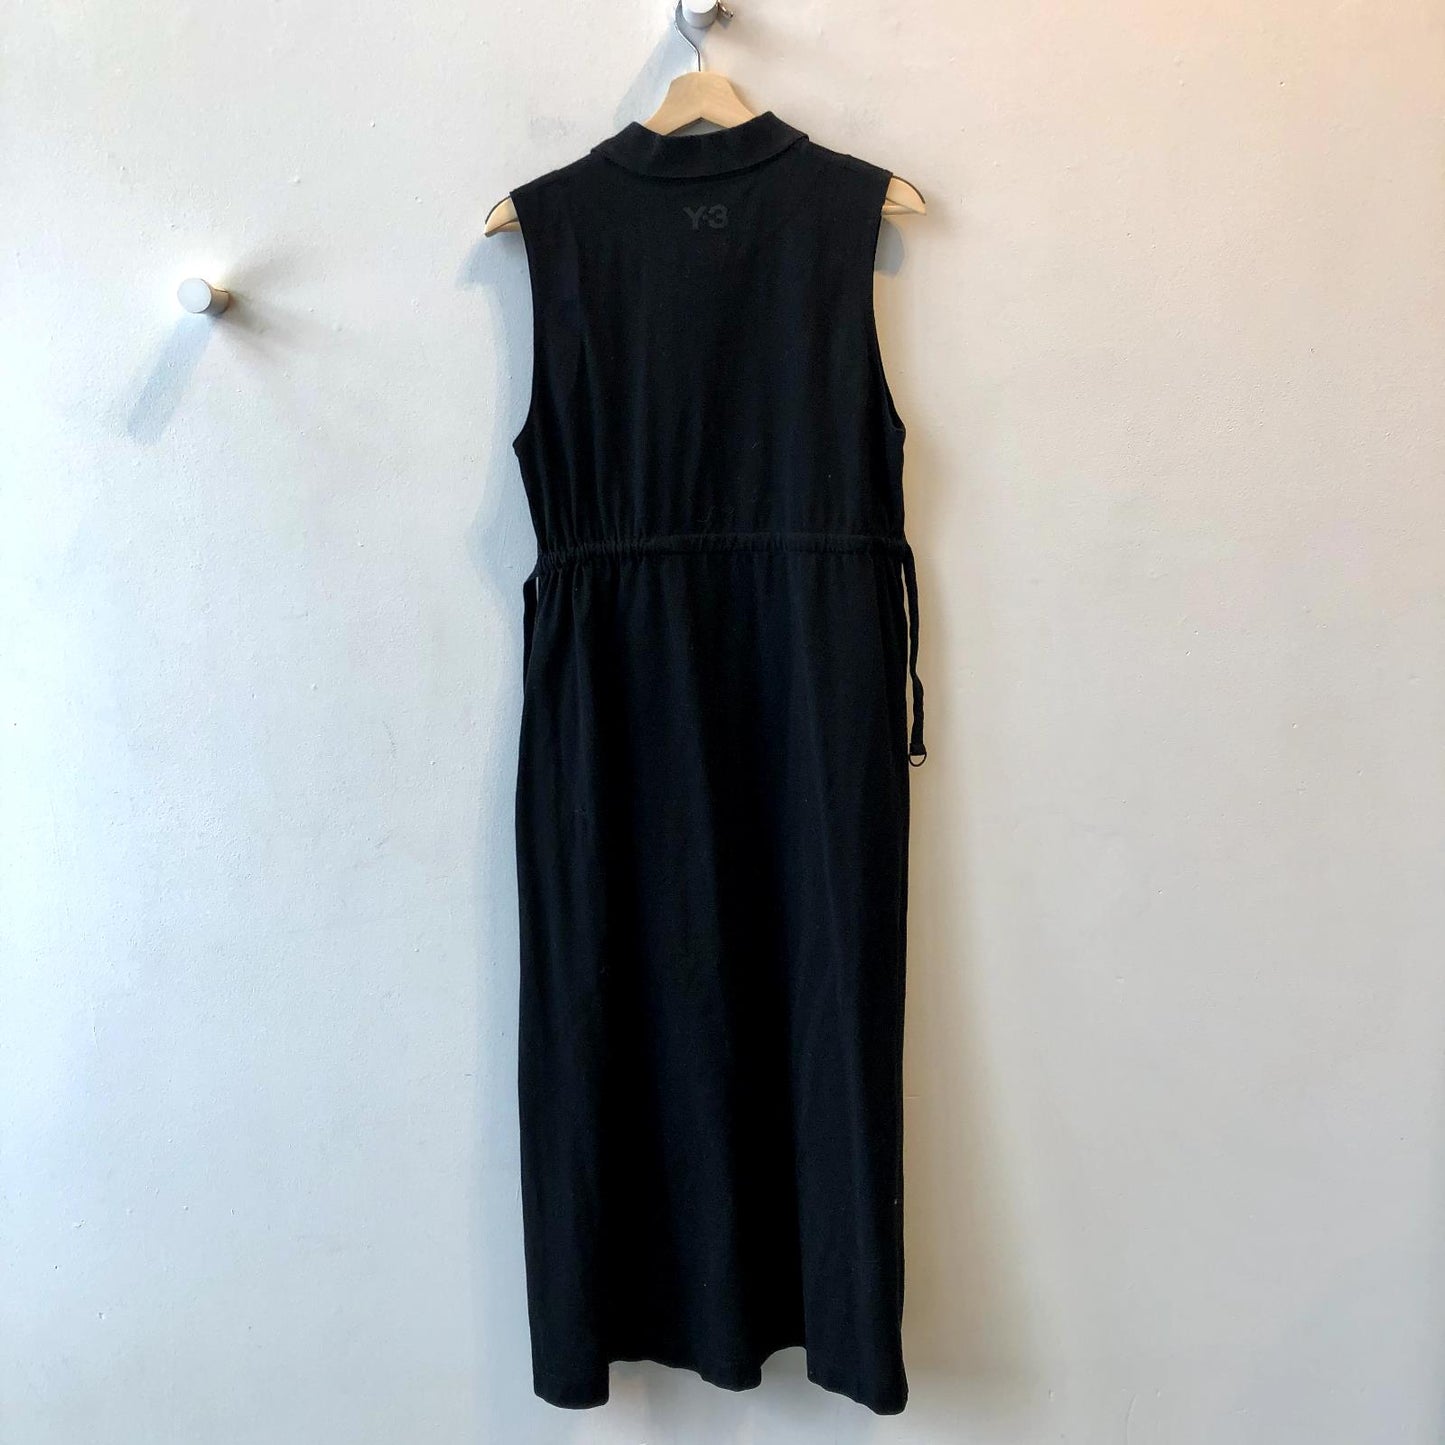 S - Y-3 Yohji Yamamoto Adidas Black High Neck Sleeveless Maxi Dress 0313AH